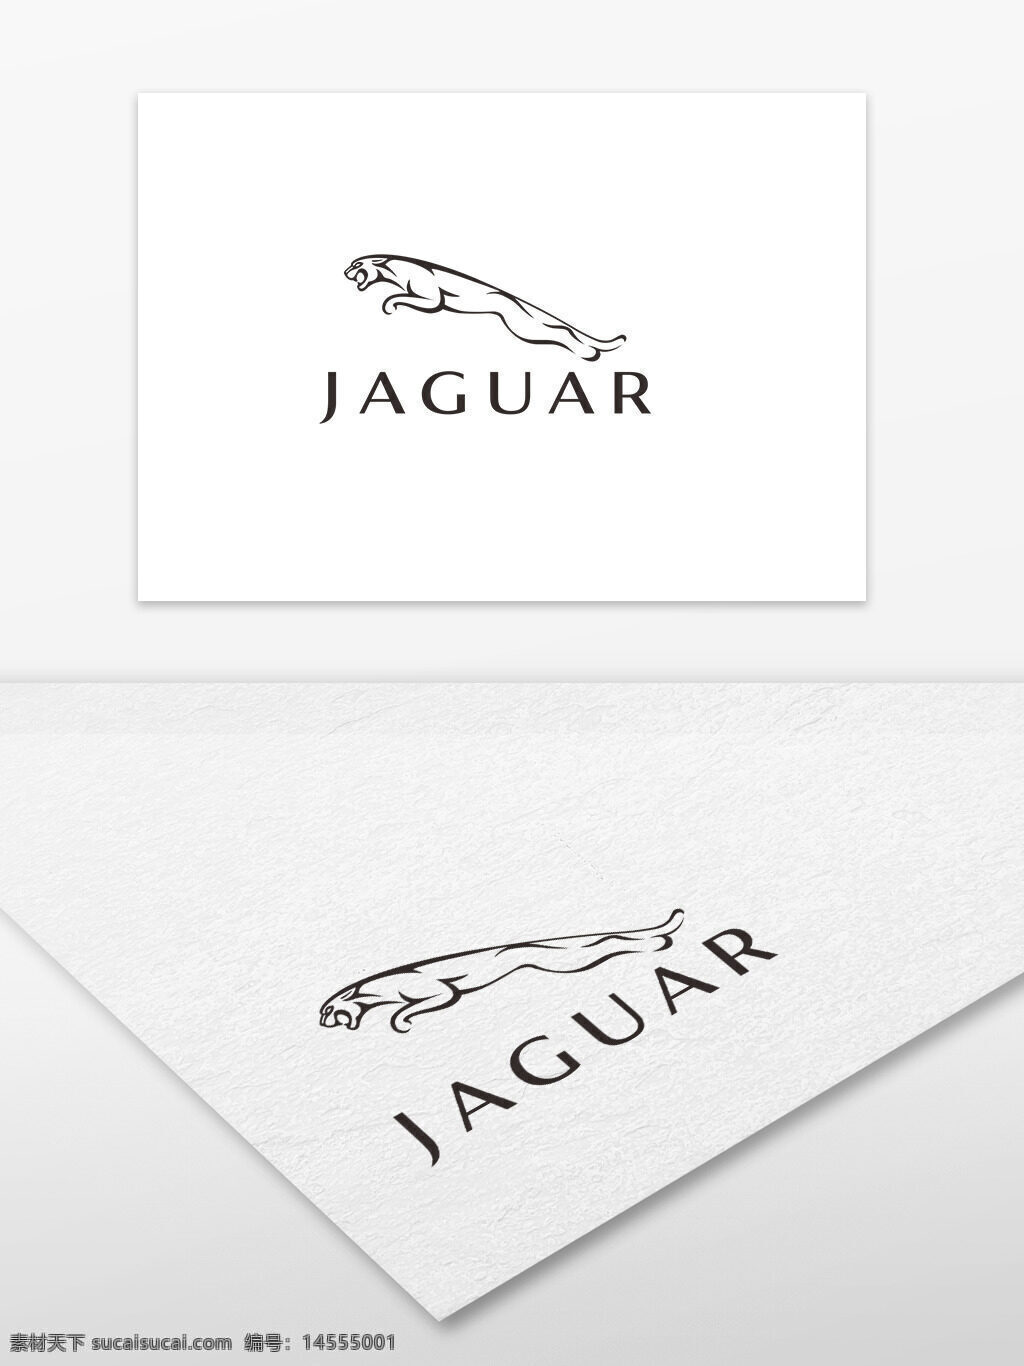 Jaguar Logo 2022 Hd